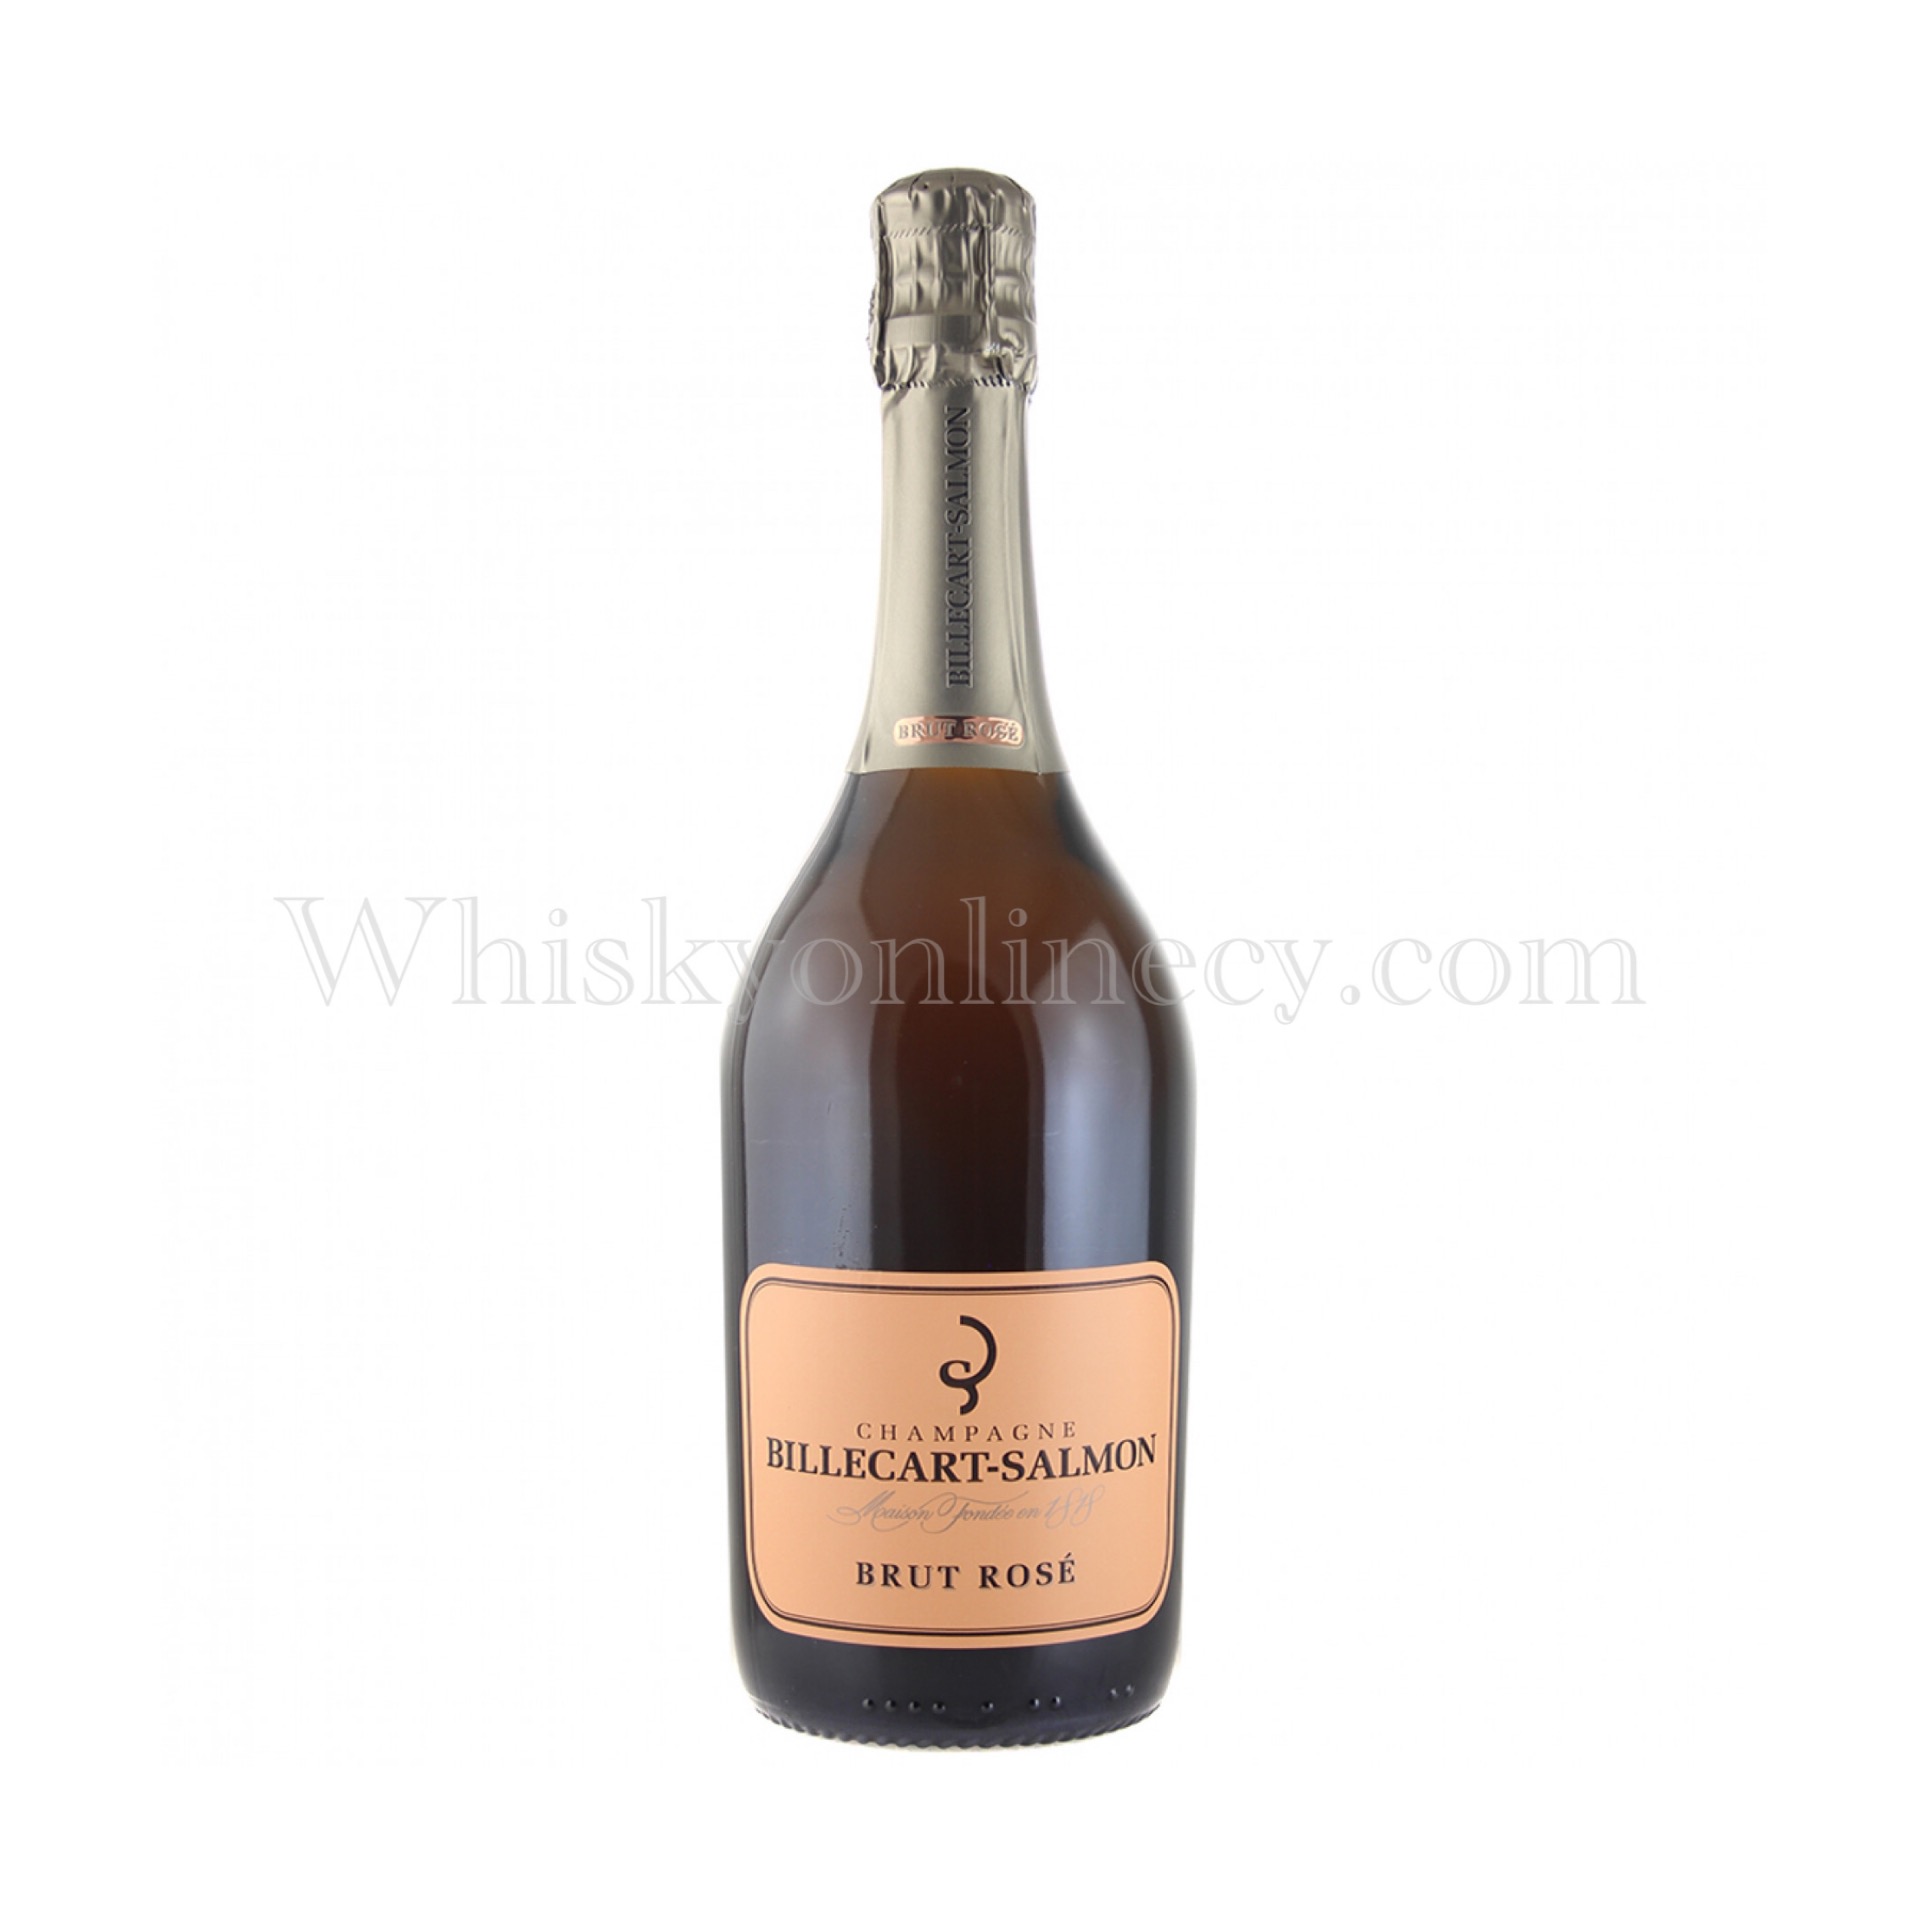 Whisky Online Cyprus - Billecart - Salmon Brut Rose NV Champagne(75cl,  12.5%)